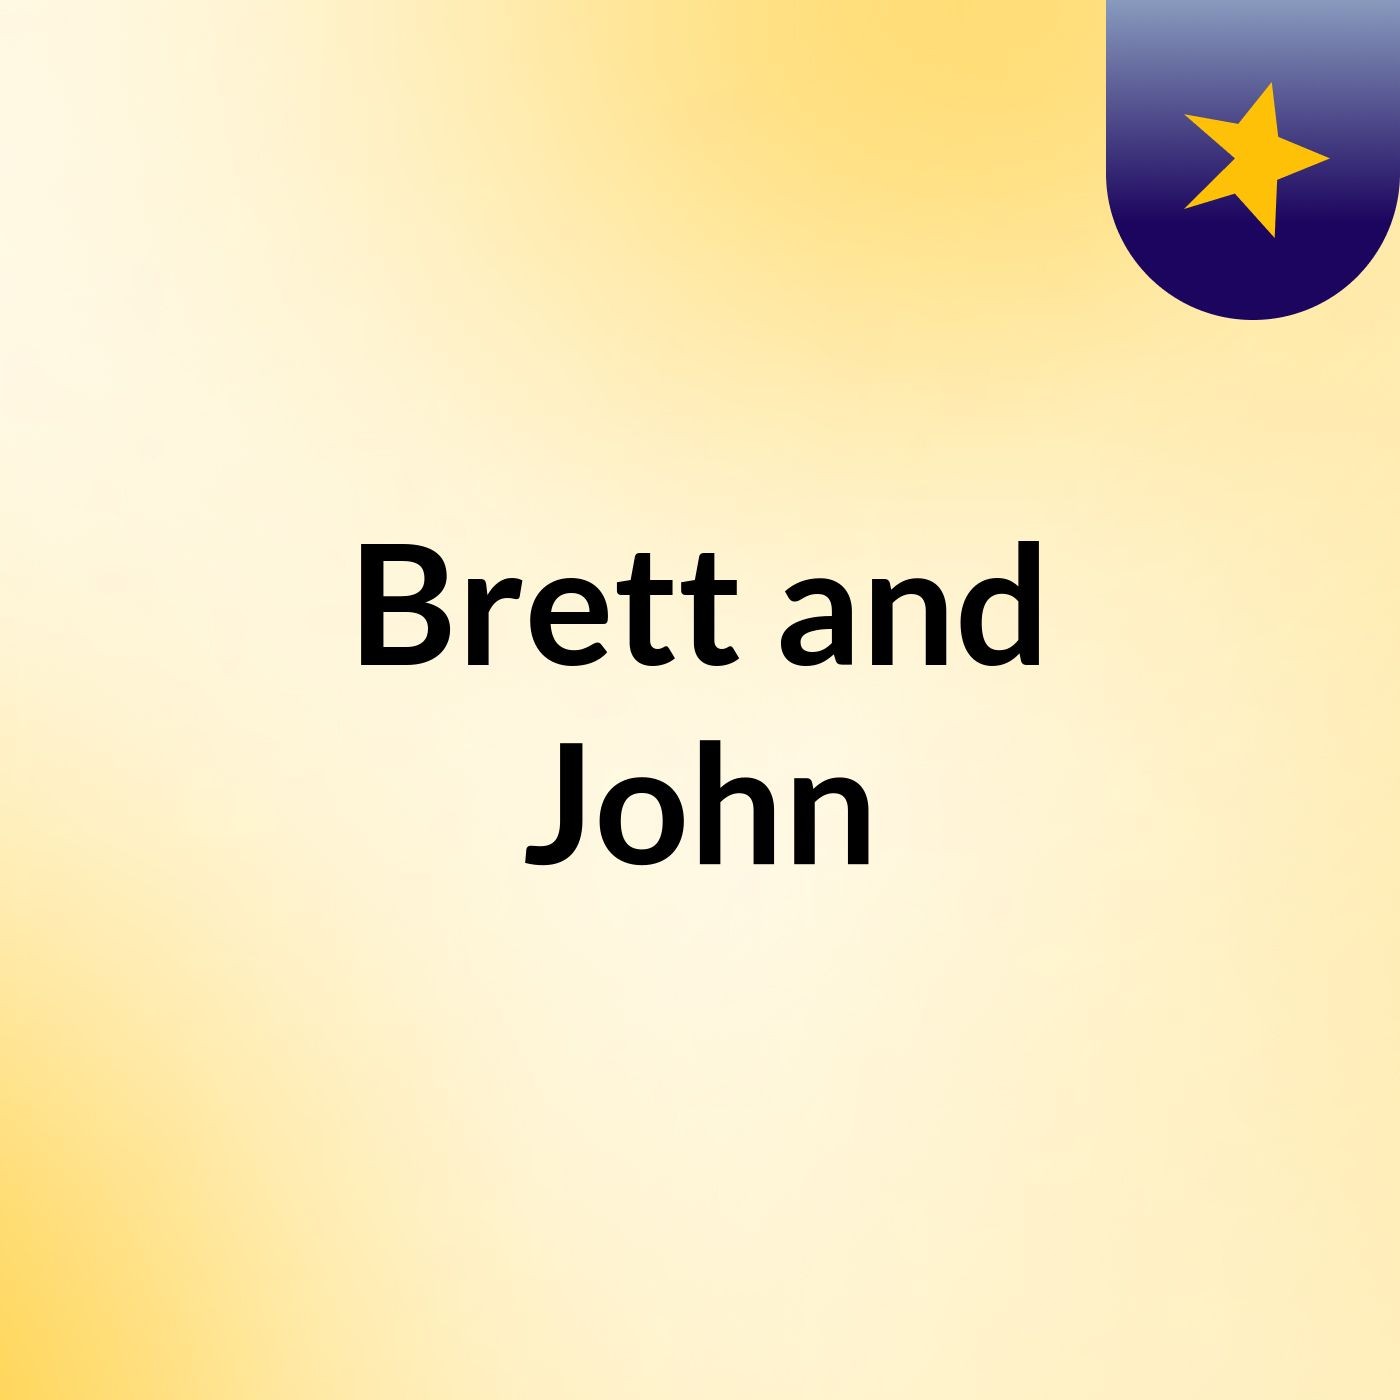 Brett and John